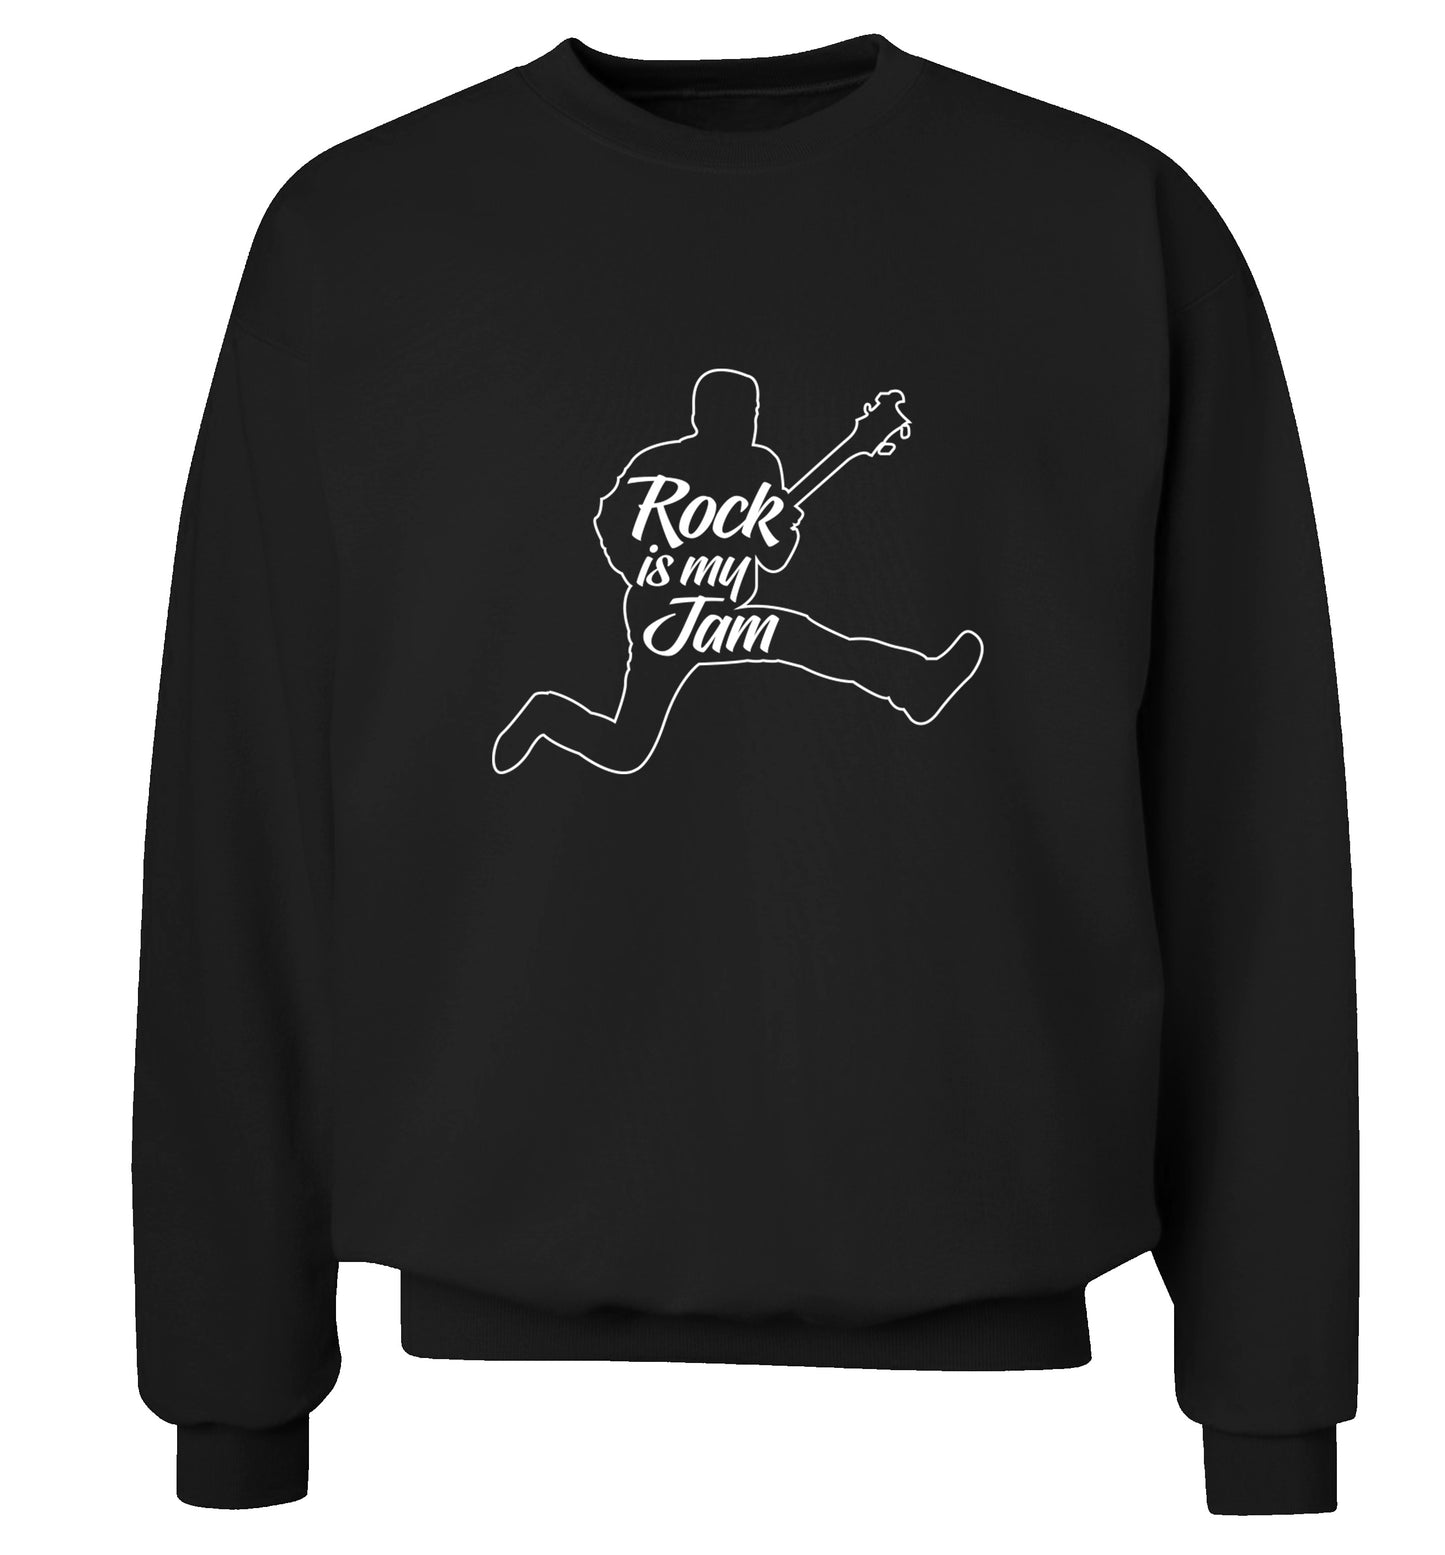 Rock is my jam Adult's unisex black Sweater 2XL